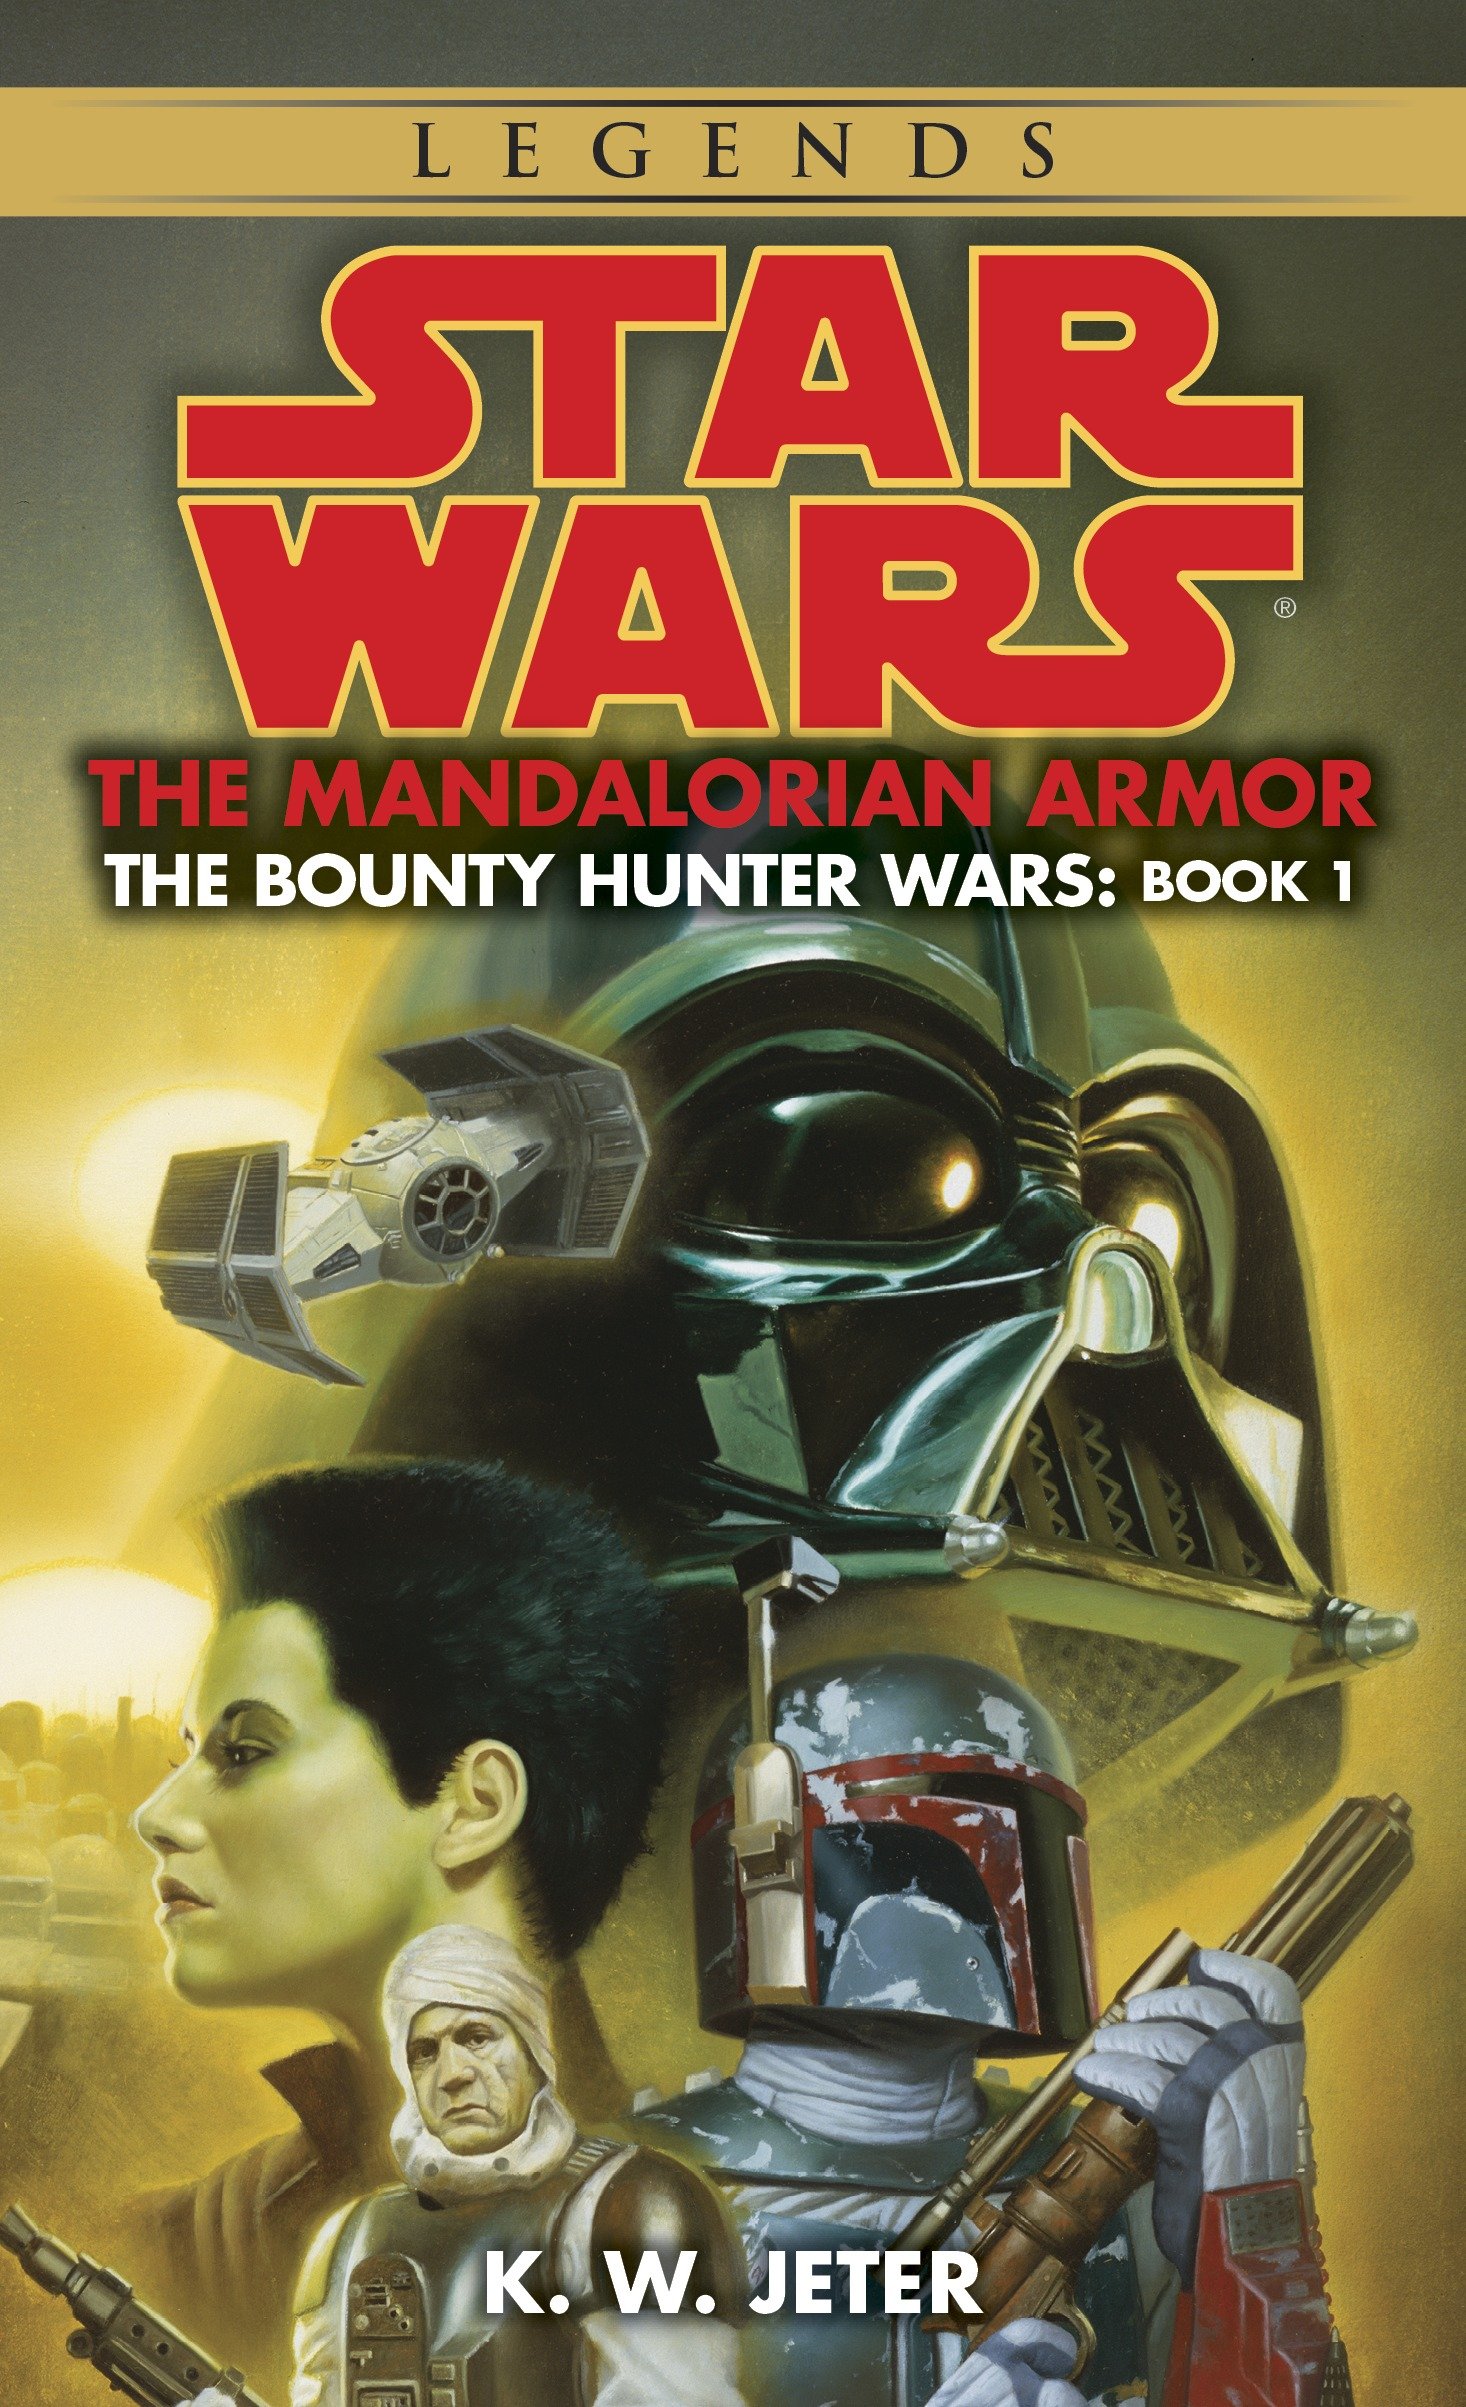 The Mandalorian Armor Star Wars Legends (The Bounty Hunter Wars)